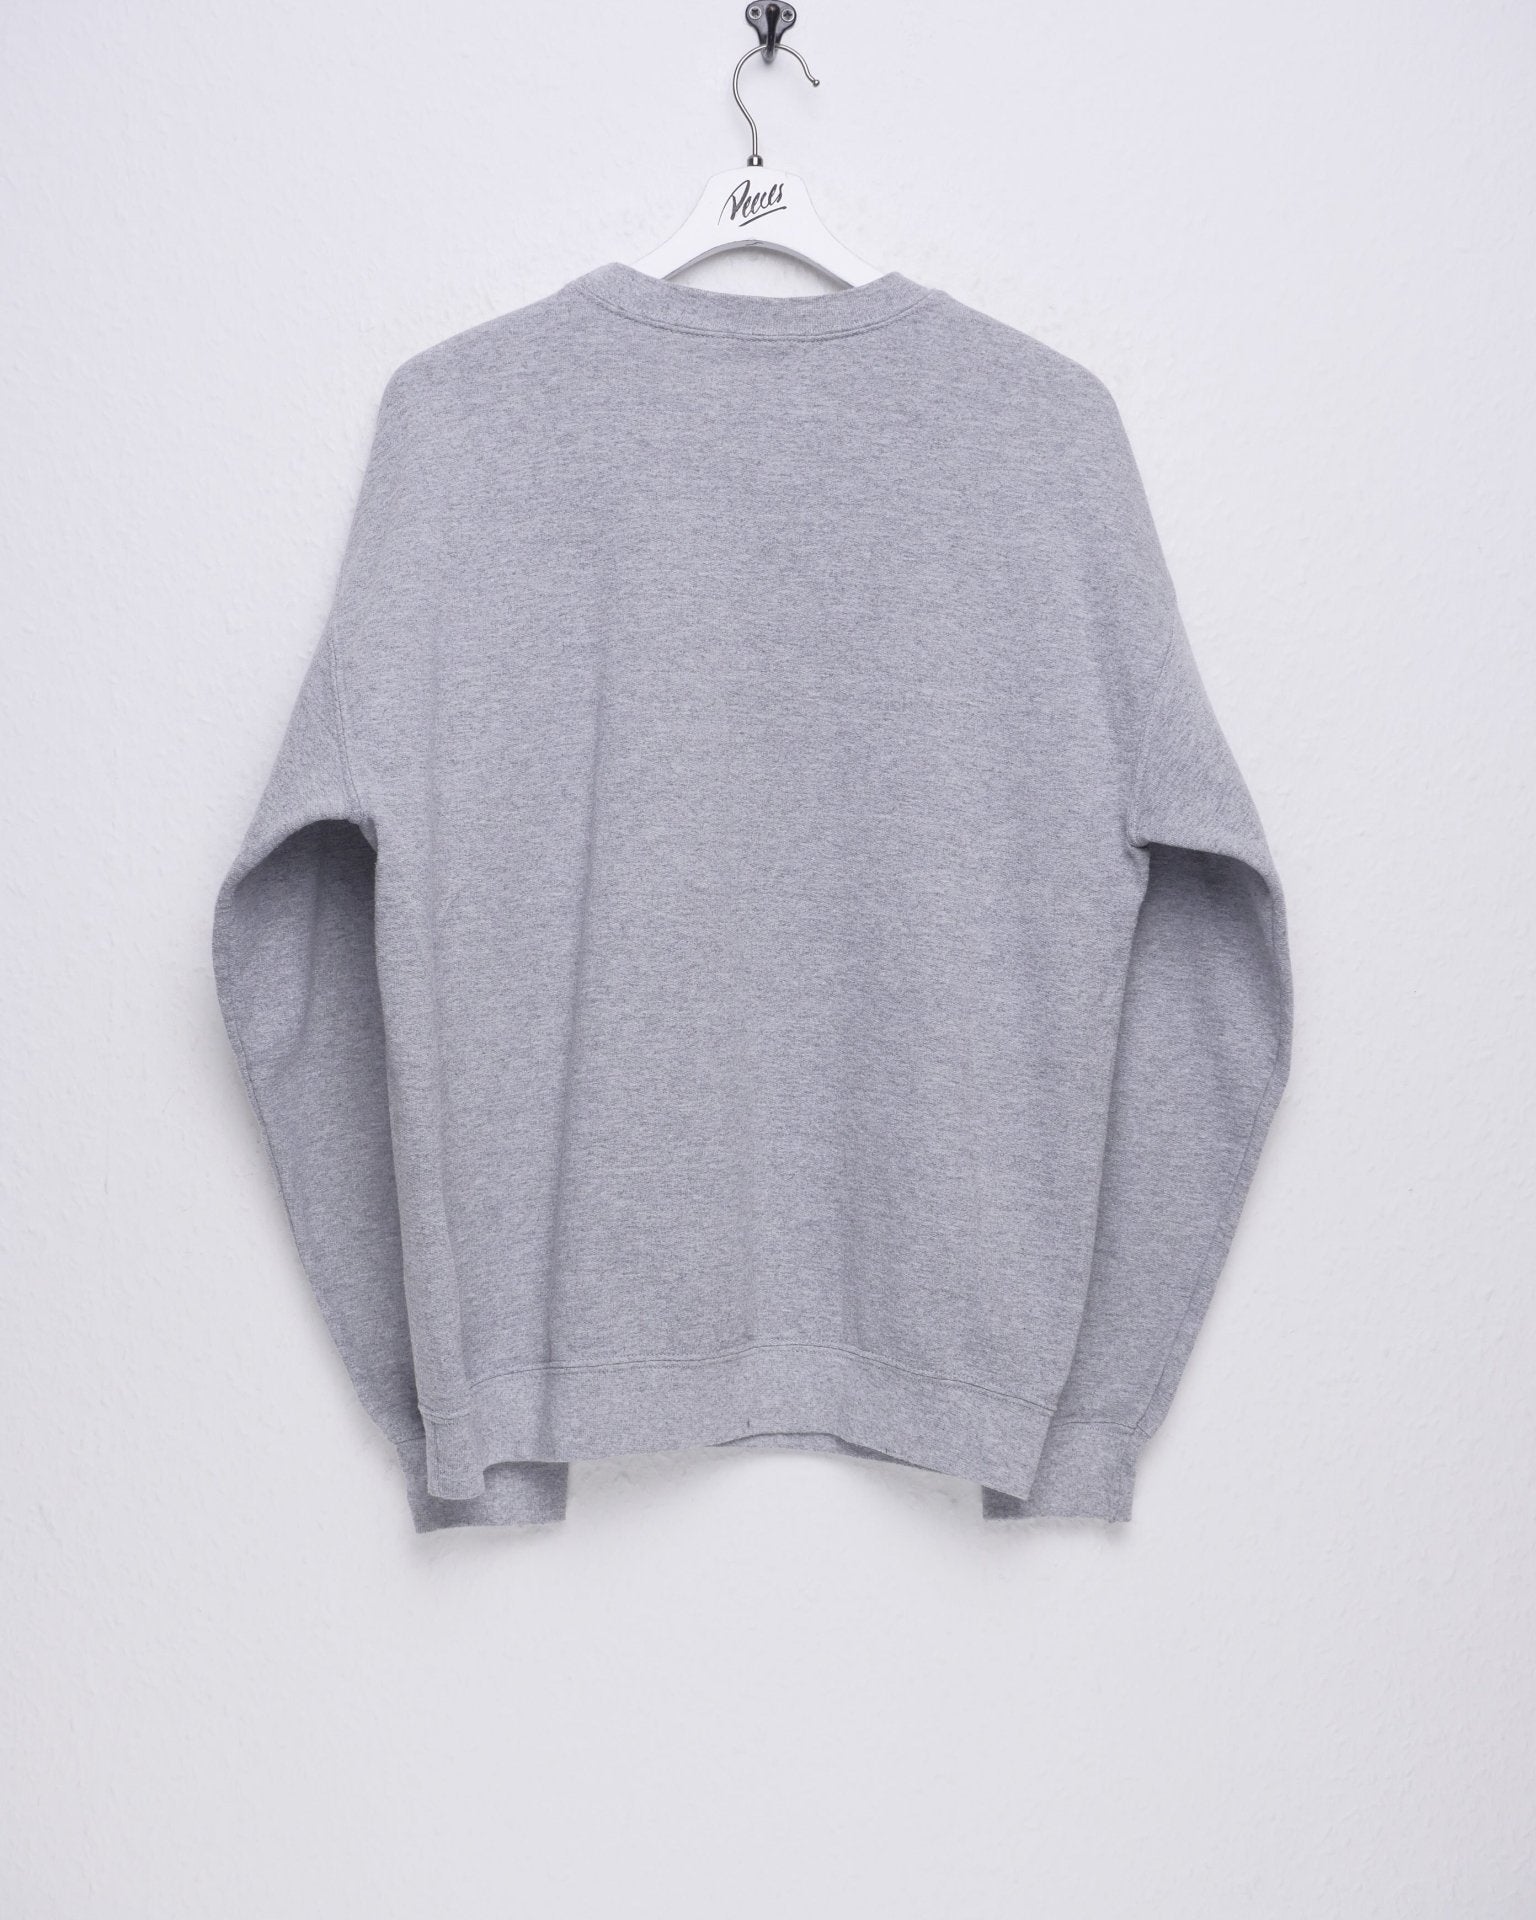 printed Logo basic grey Sweater - Peeces